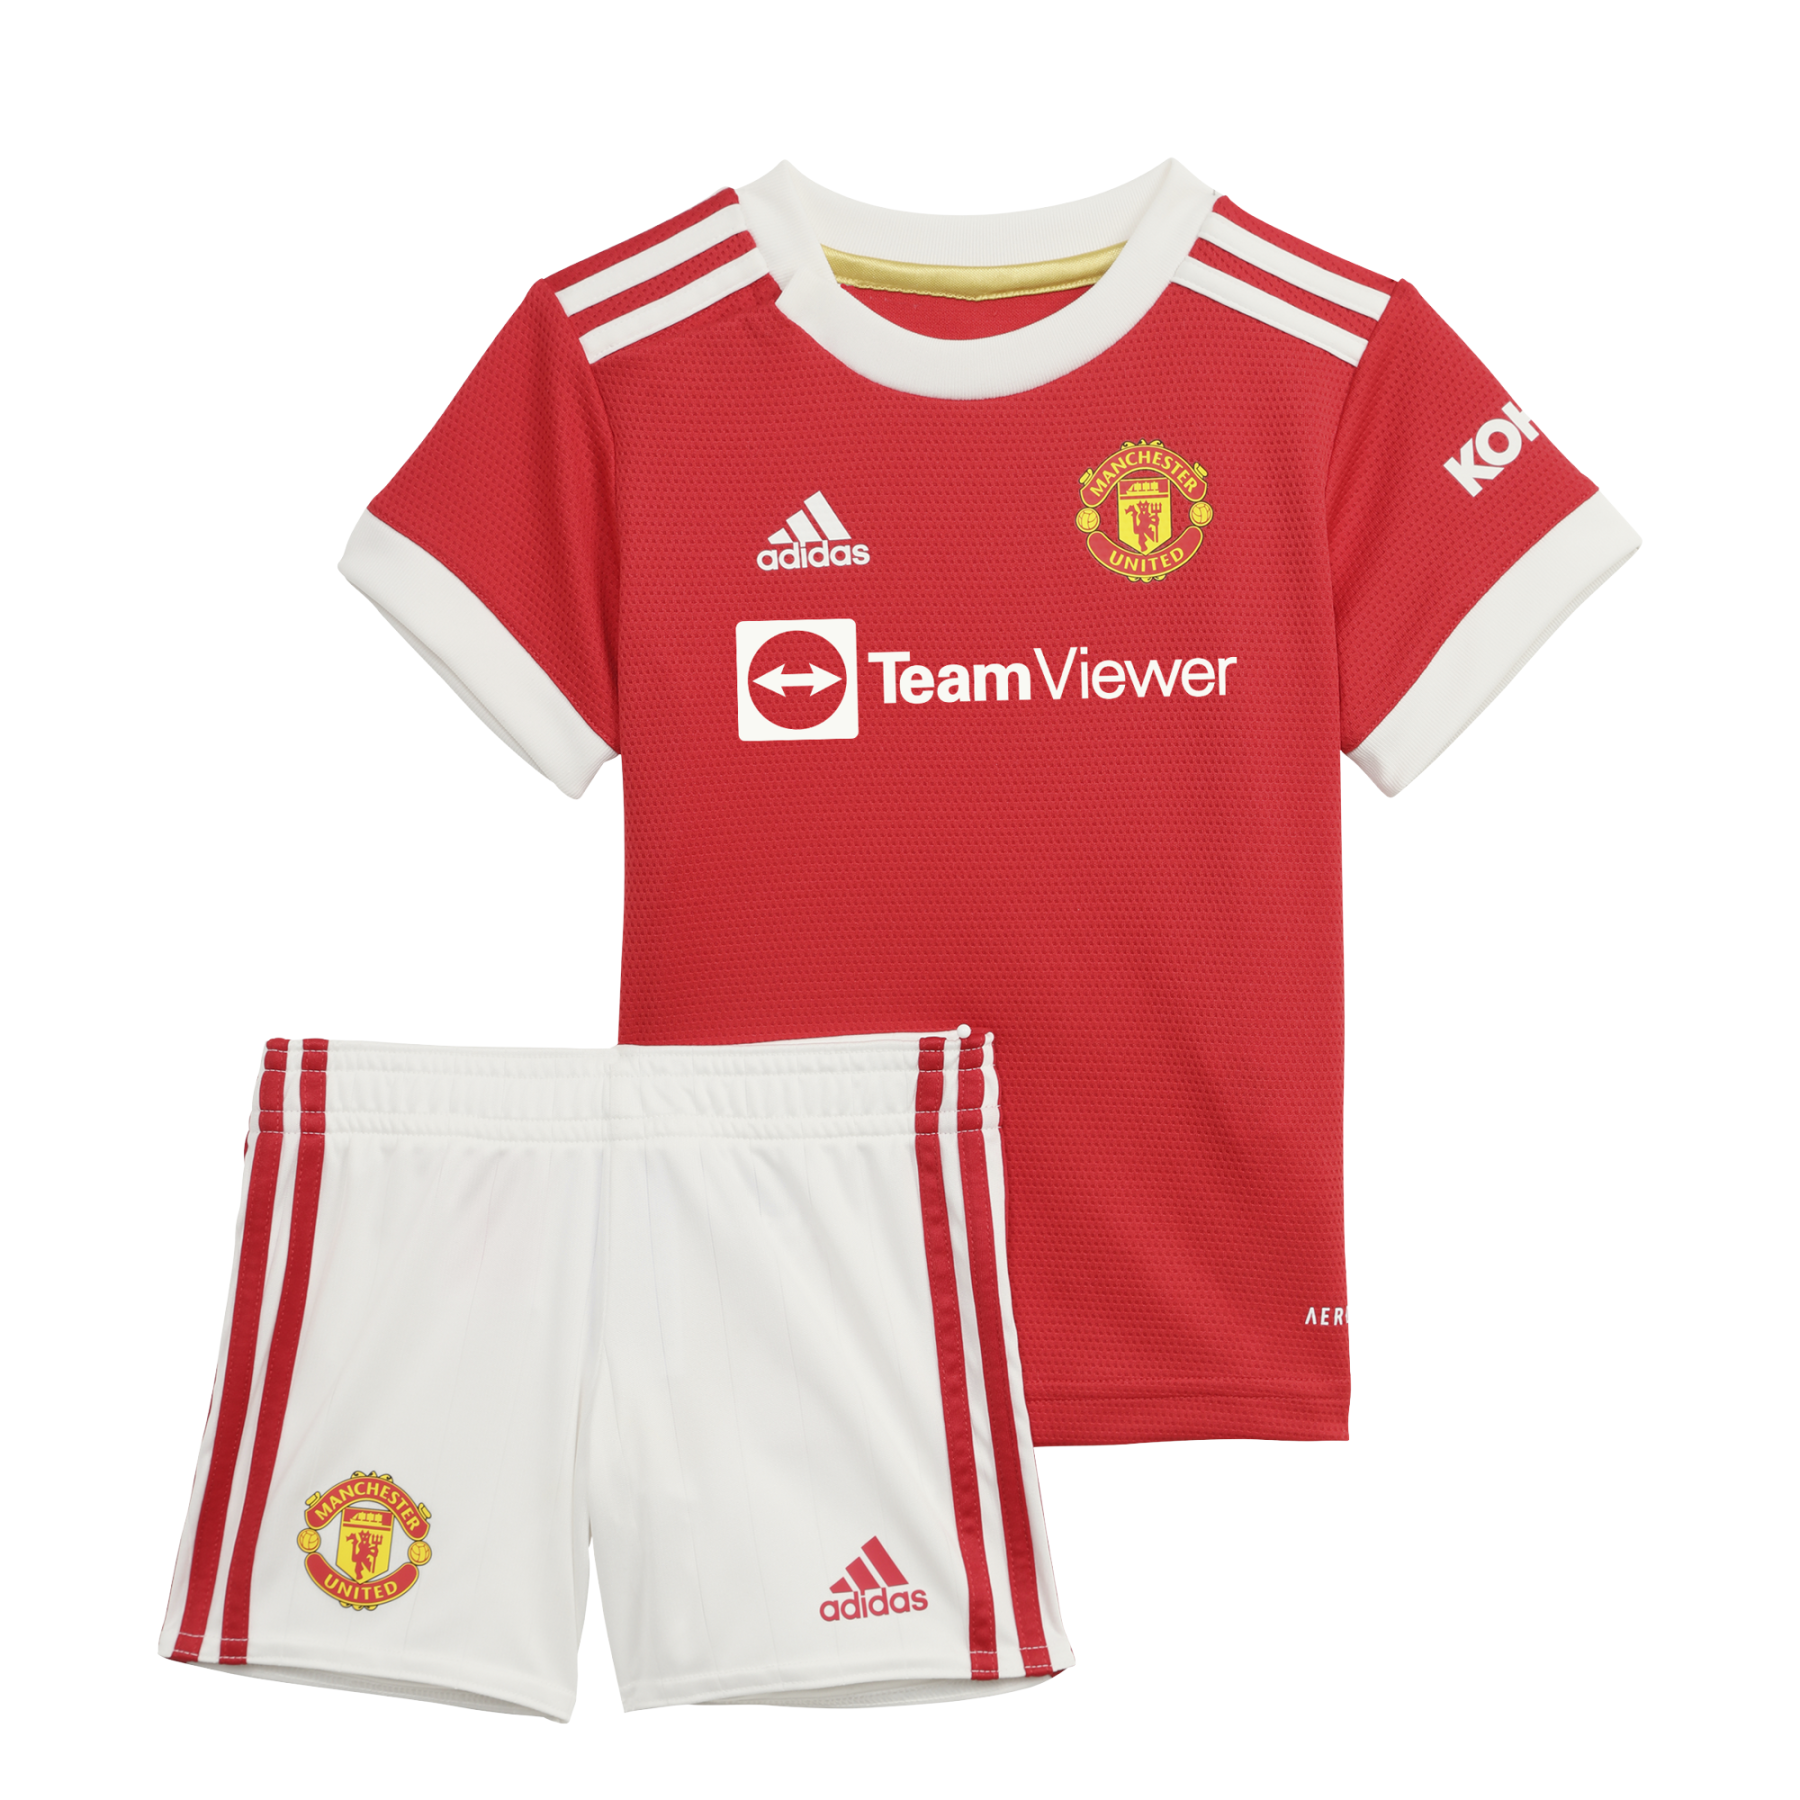 Mini-kit for children Manchester United 2021/22